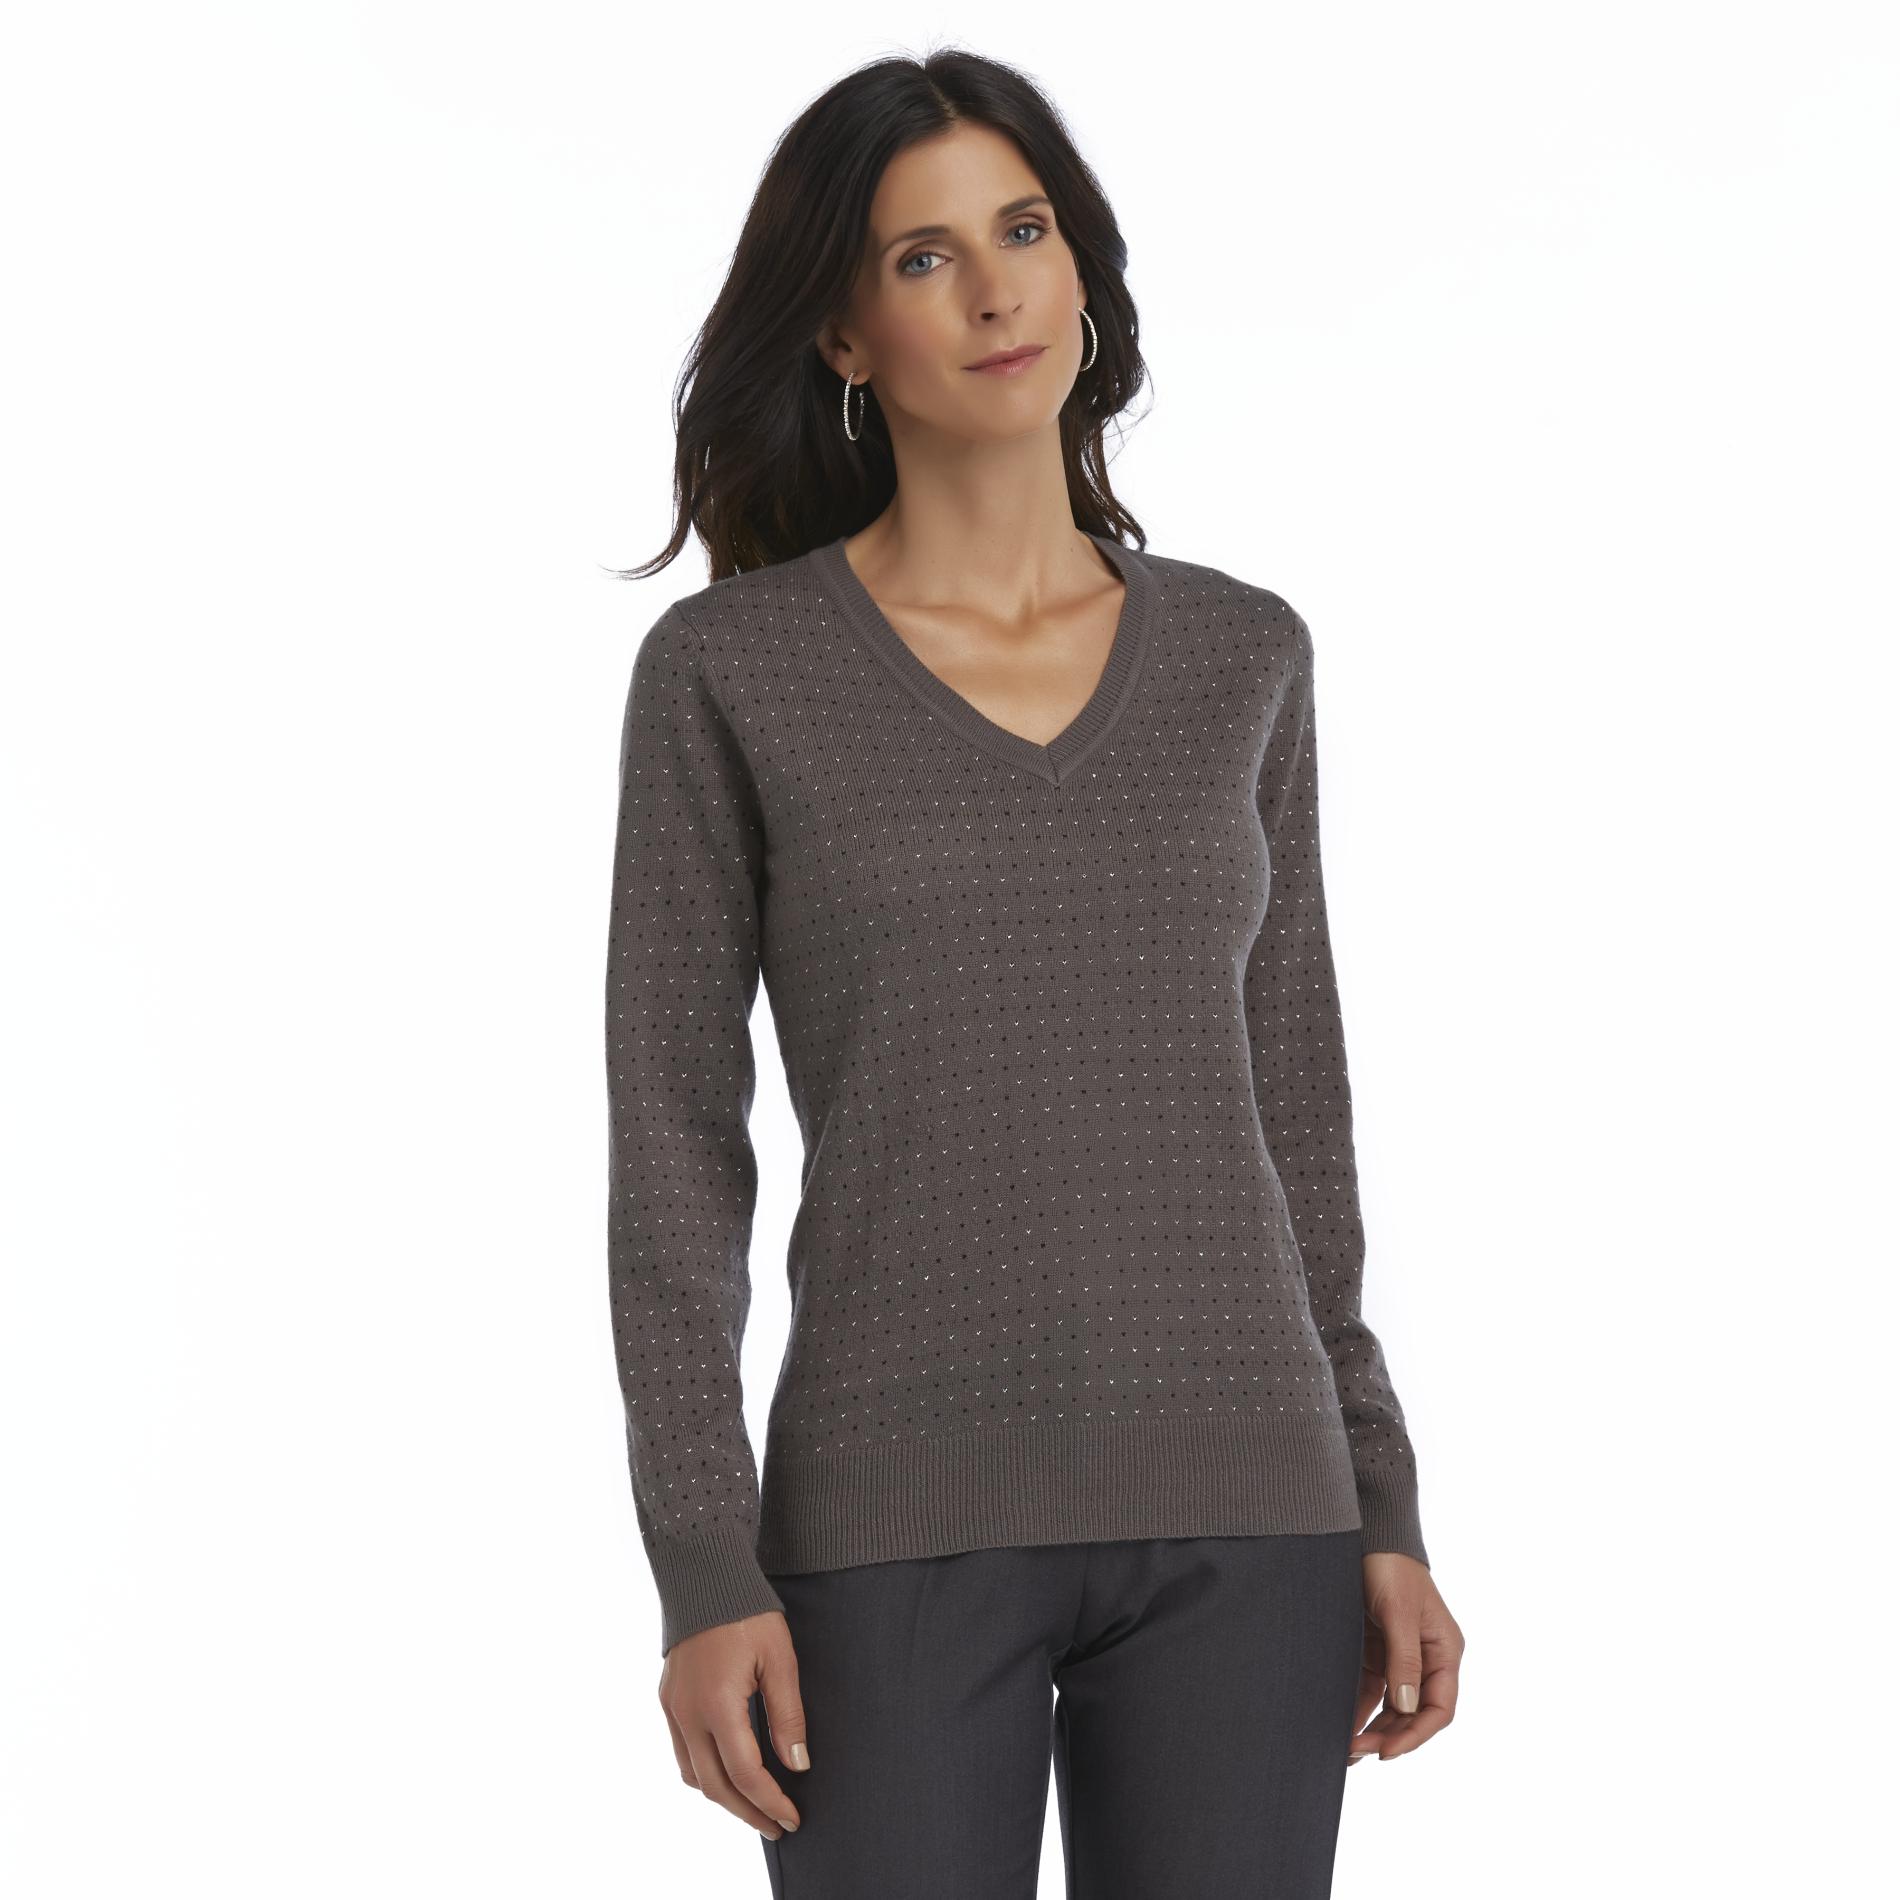 Basic Editions Women's Metallic V-Neck Sweater - Polka Dots